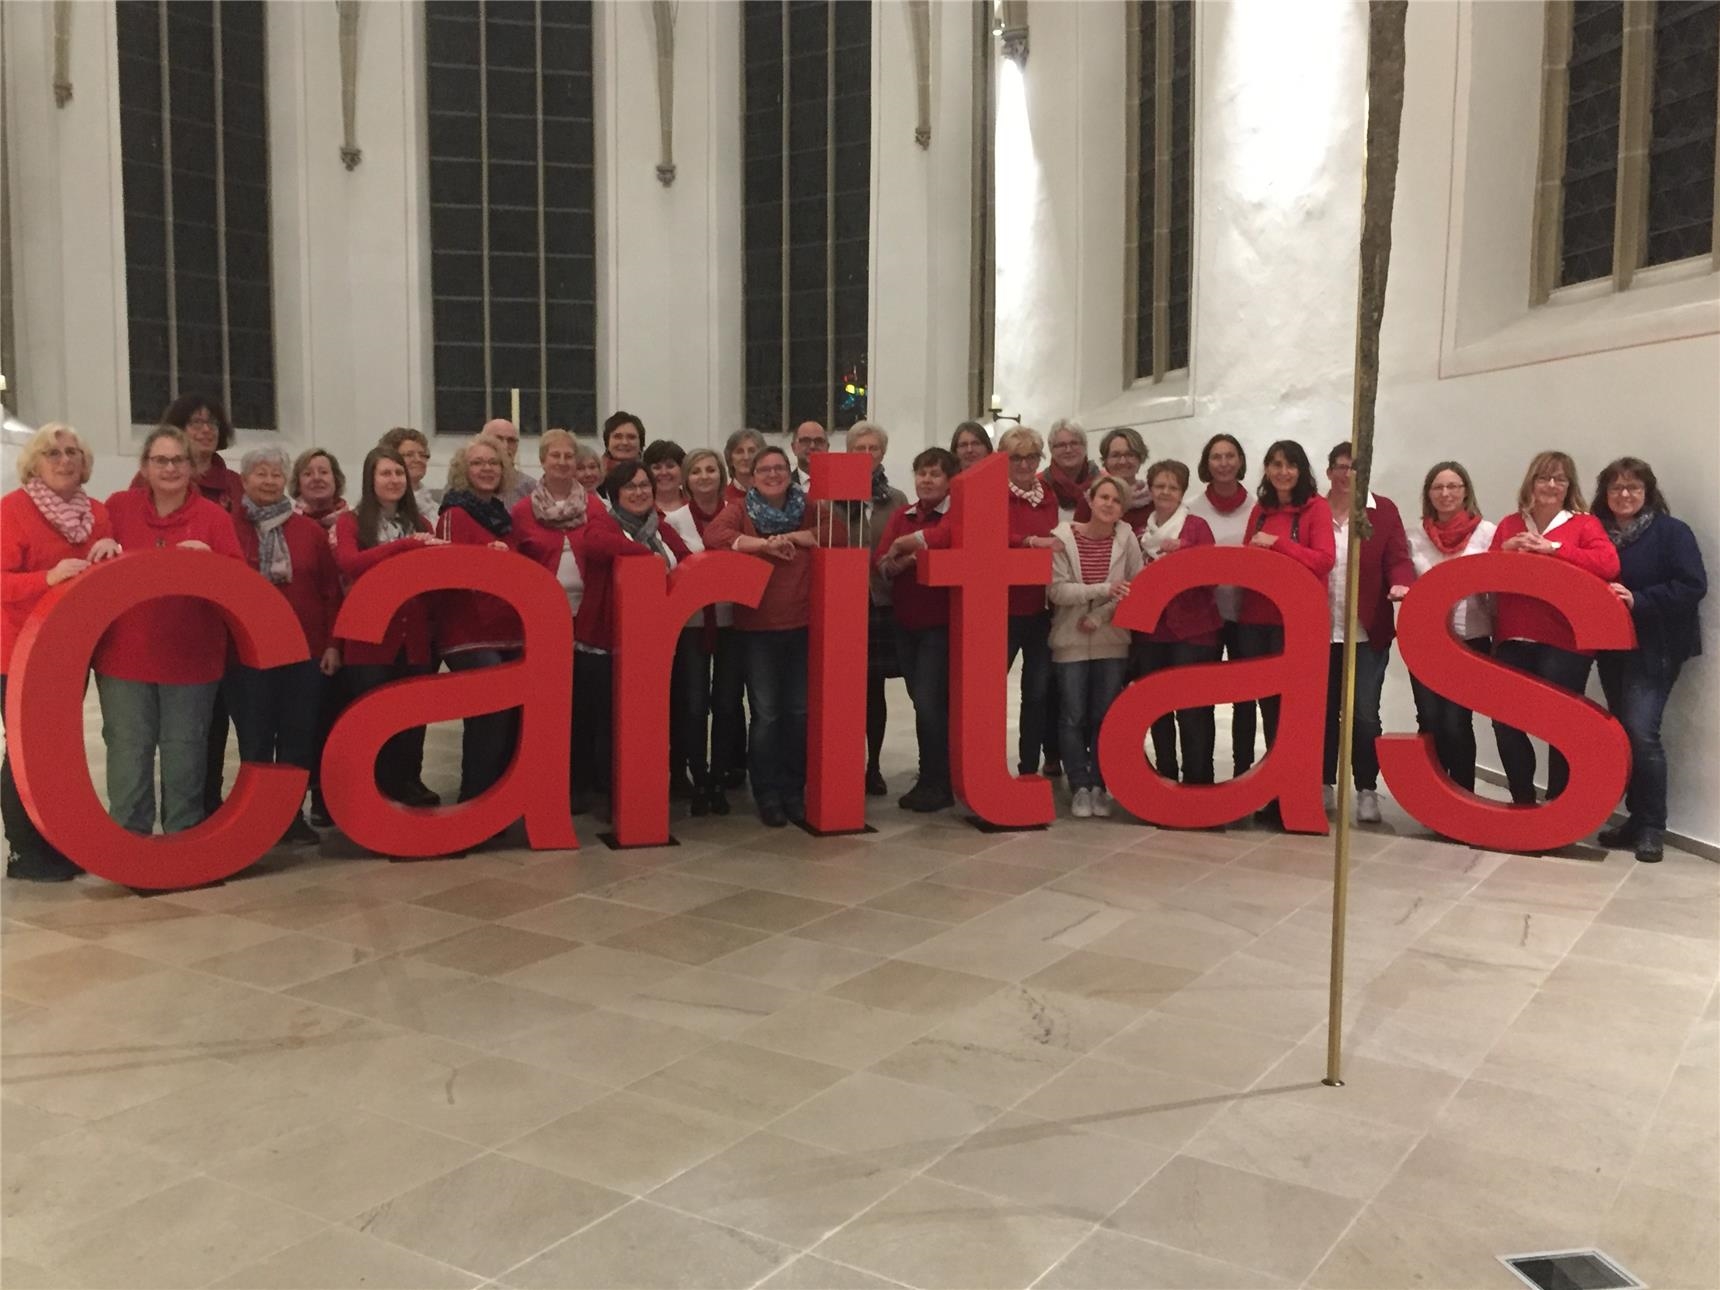 Festakt zum 100-jährigen Bestehen der Caritas Hamm (Caritas Hamm)